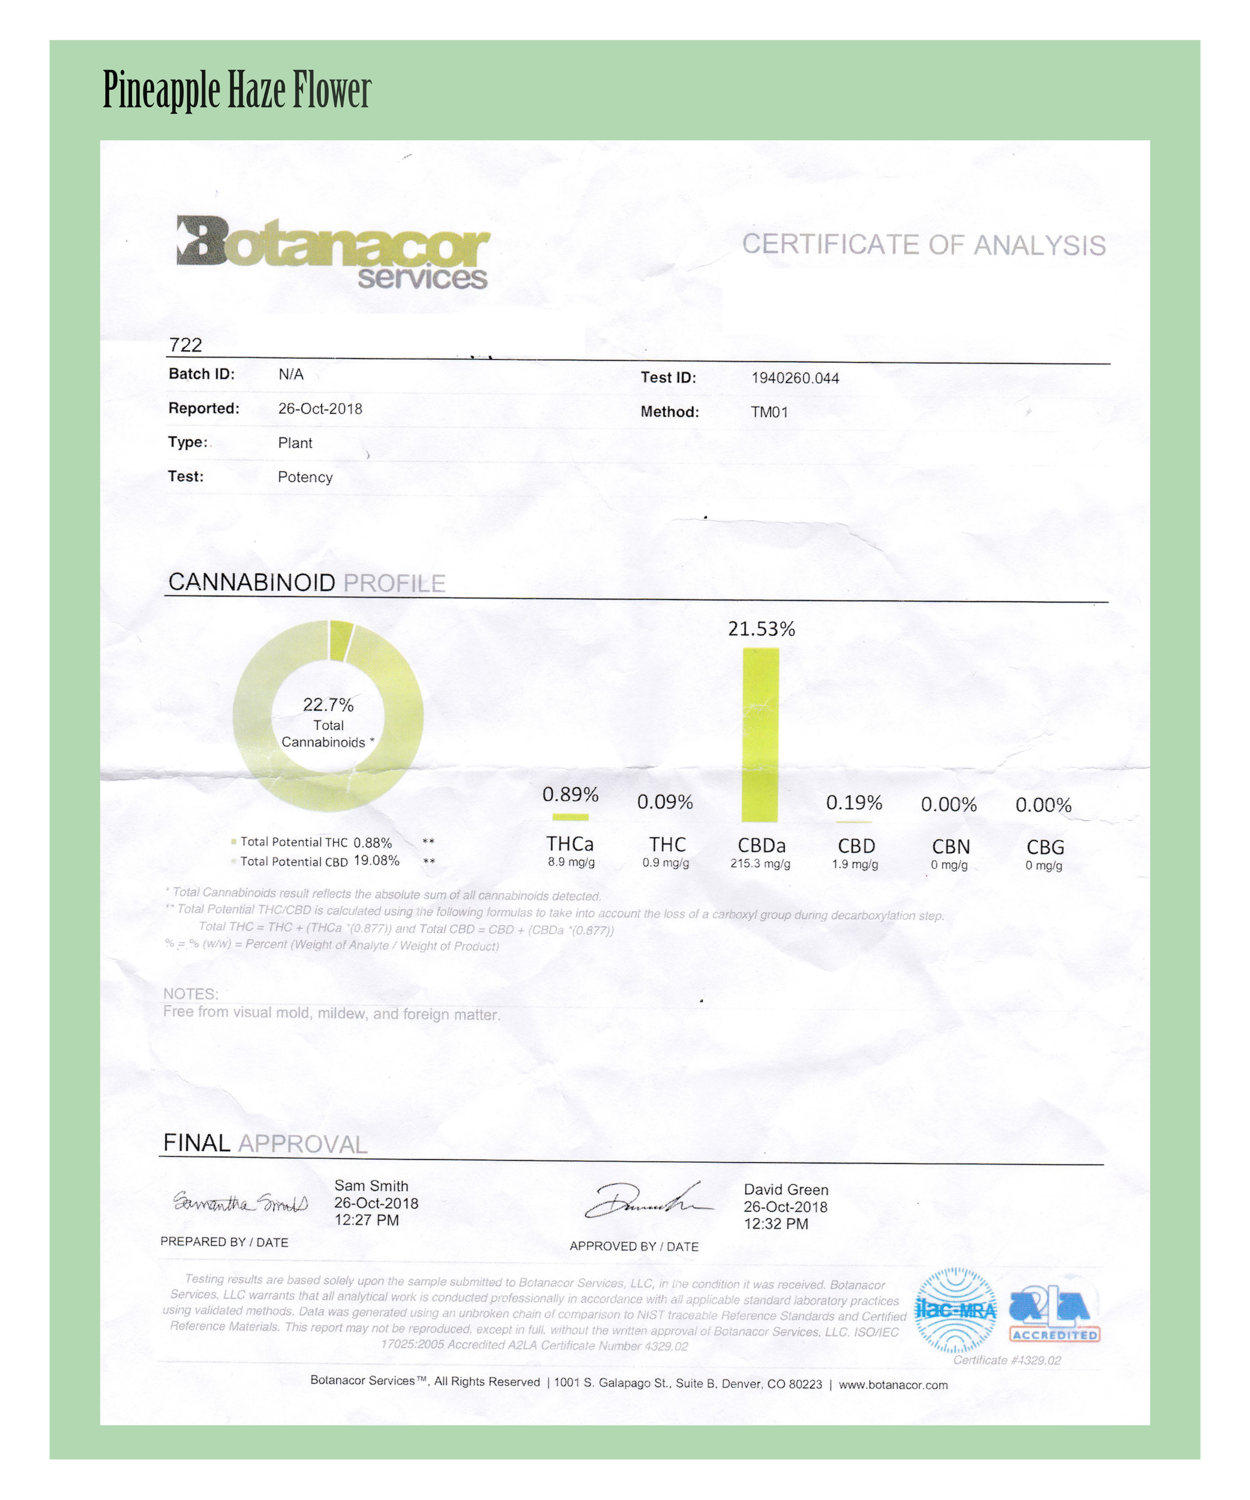 Texas Tonix - Texas Tonix Flowers - Pineapple Haze Certificate of Analysis